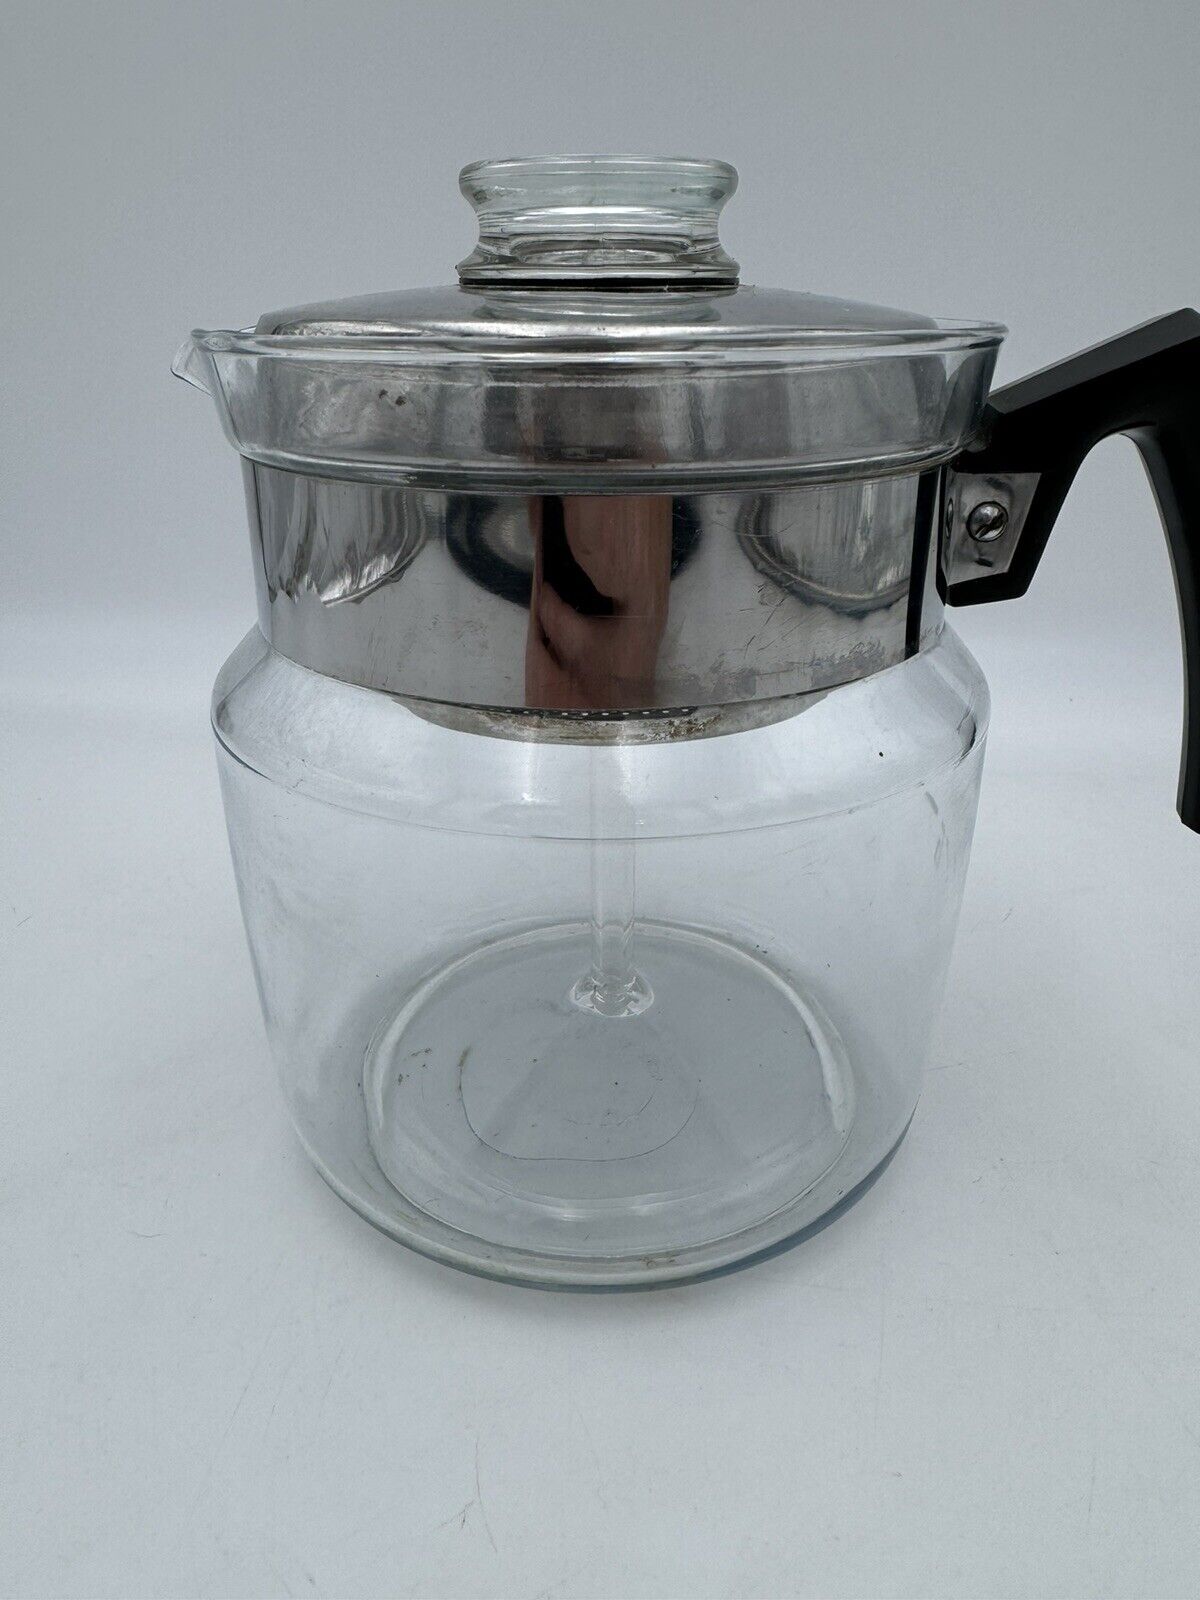 Vintage Pyrex glass percolator #8859 B flameware COMPLETE No Chips Cracks EUC